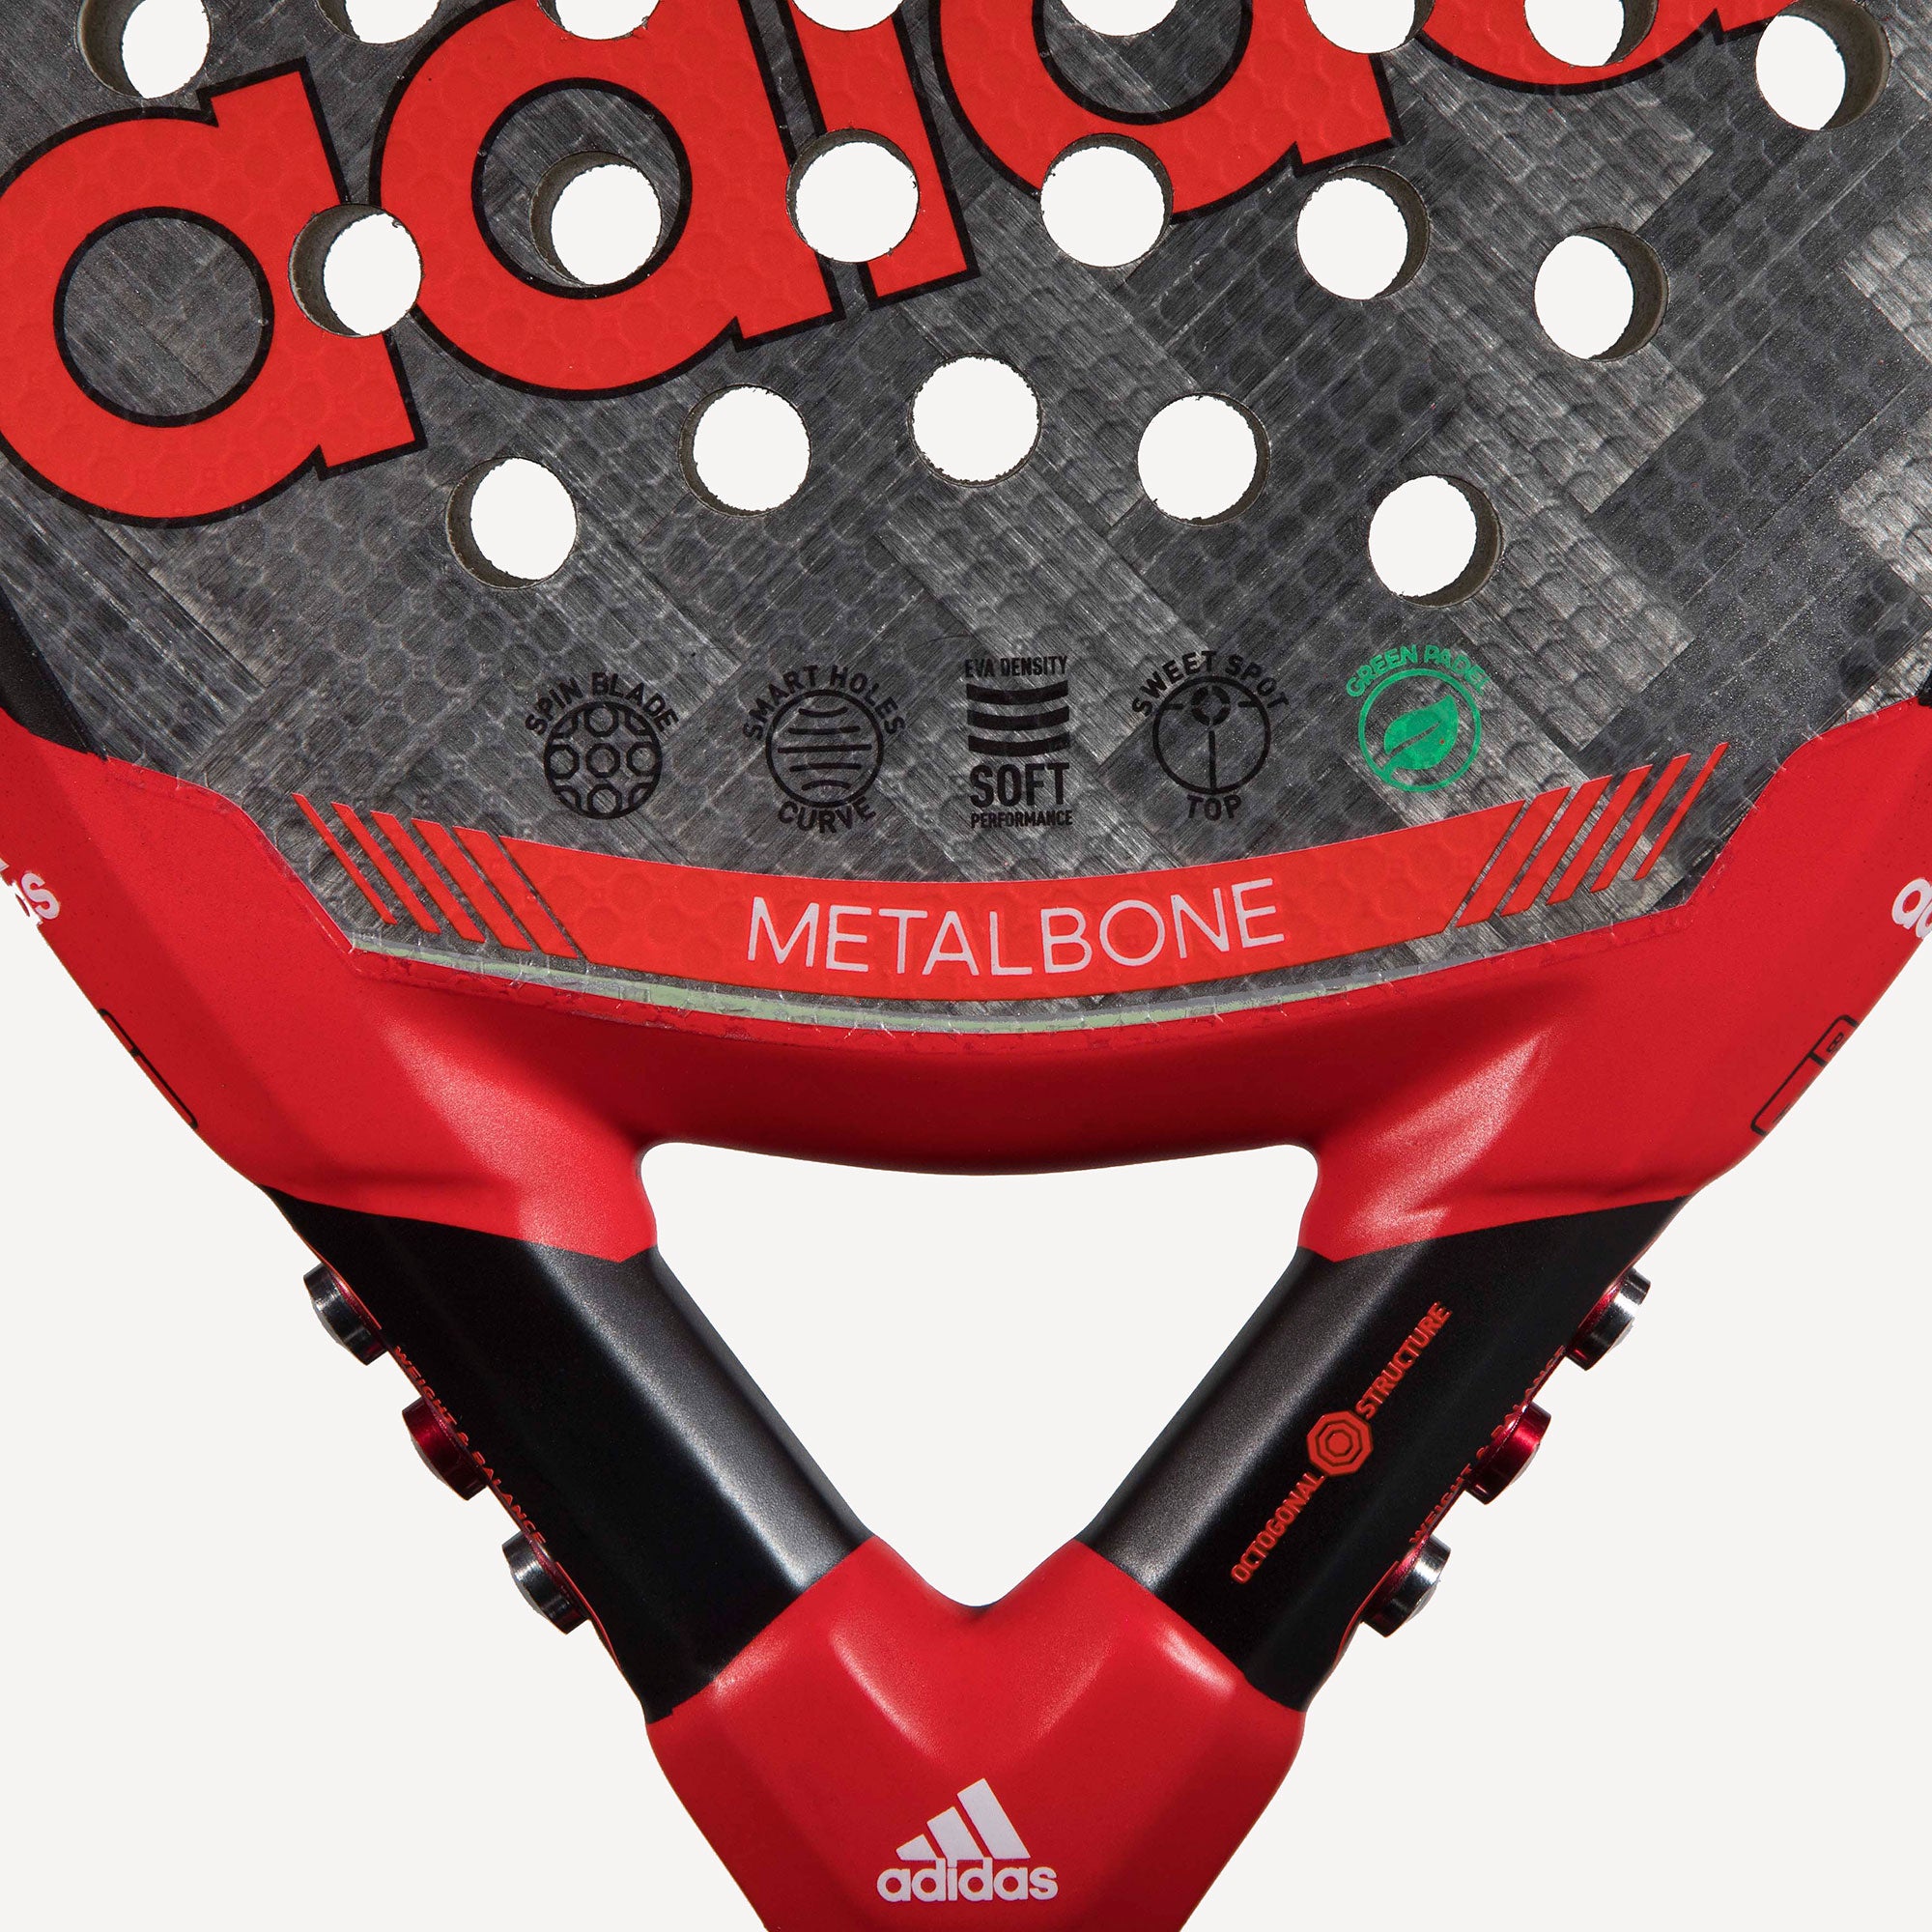 adidas Metalbone 3.1 Padel Racket 4